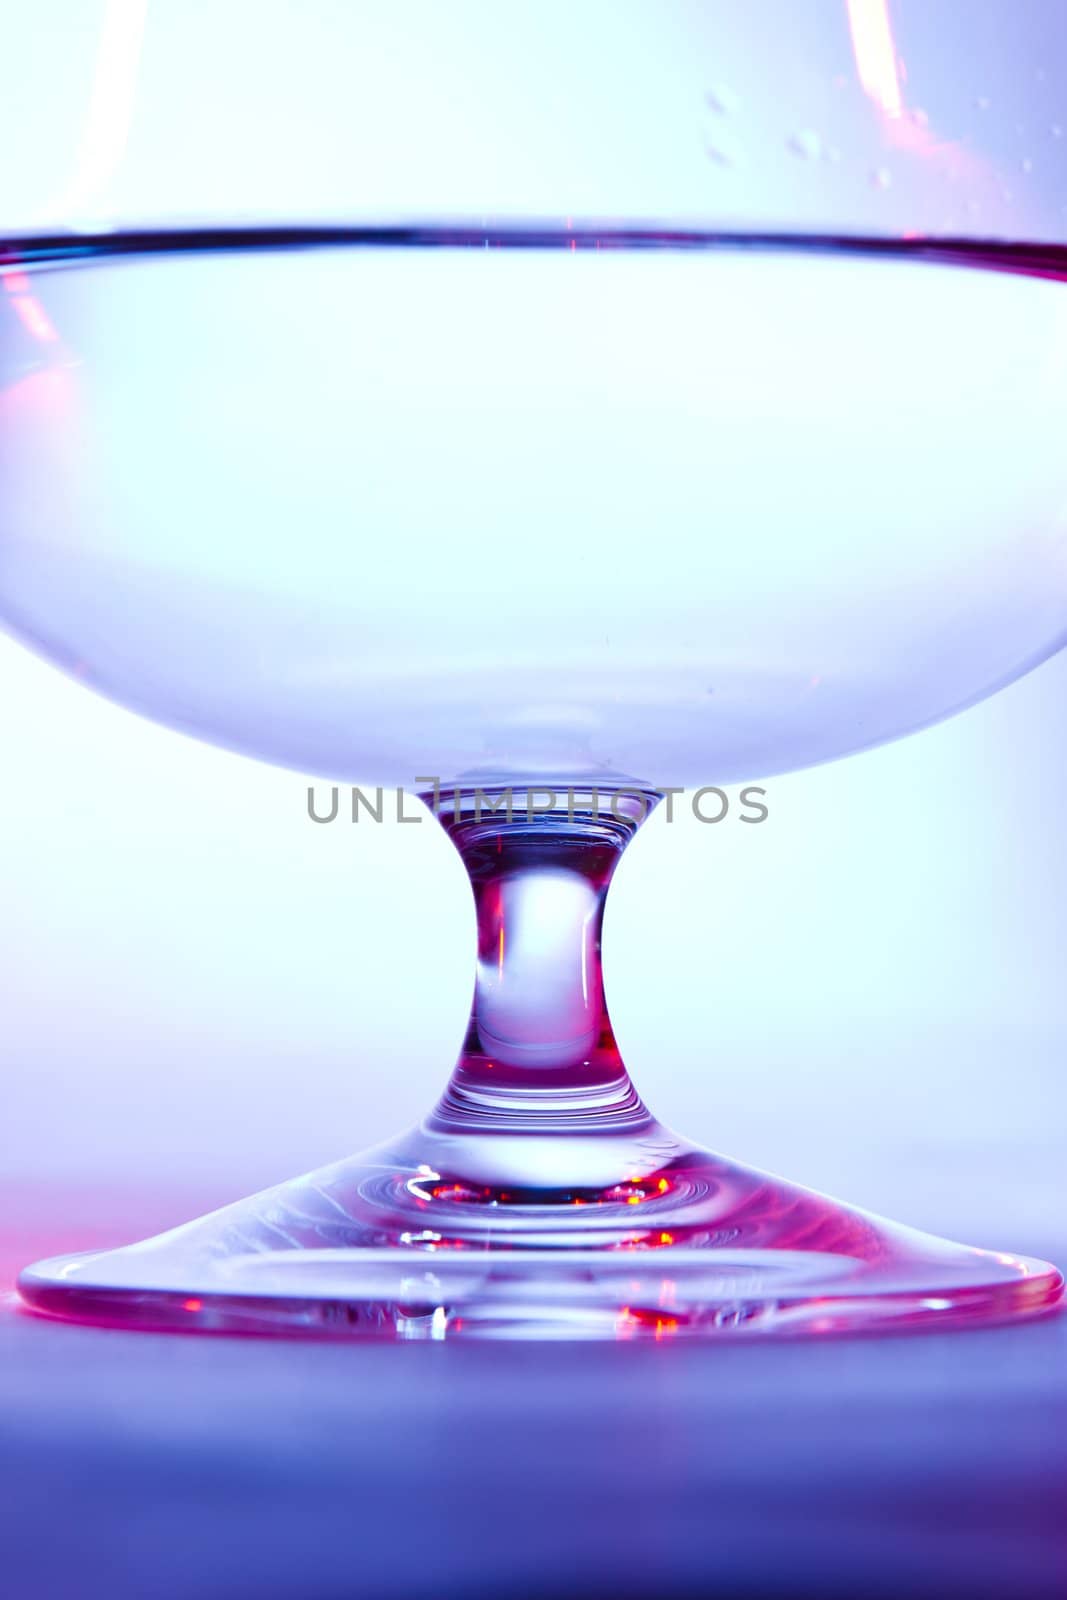 glass for brandy by Natalia-Reutova